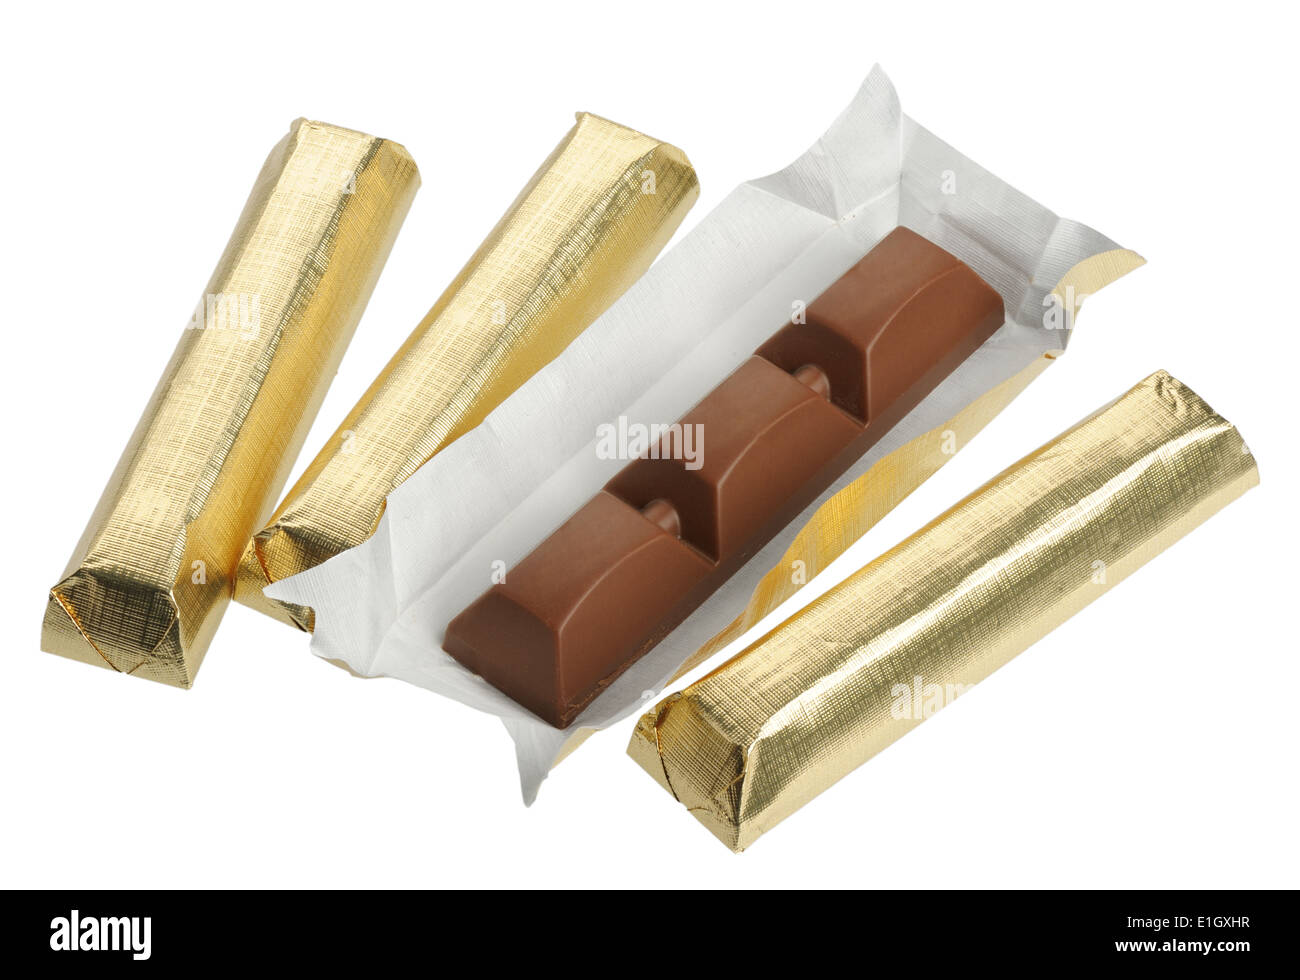 gold chocolate bar - Google Search